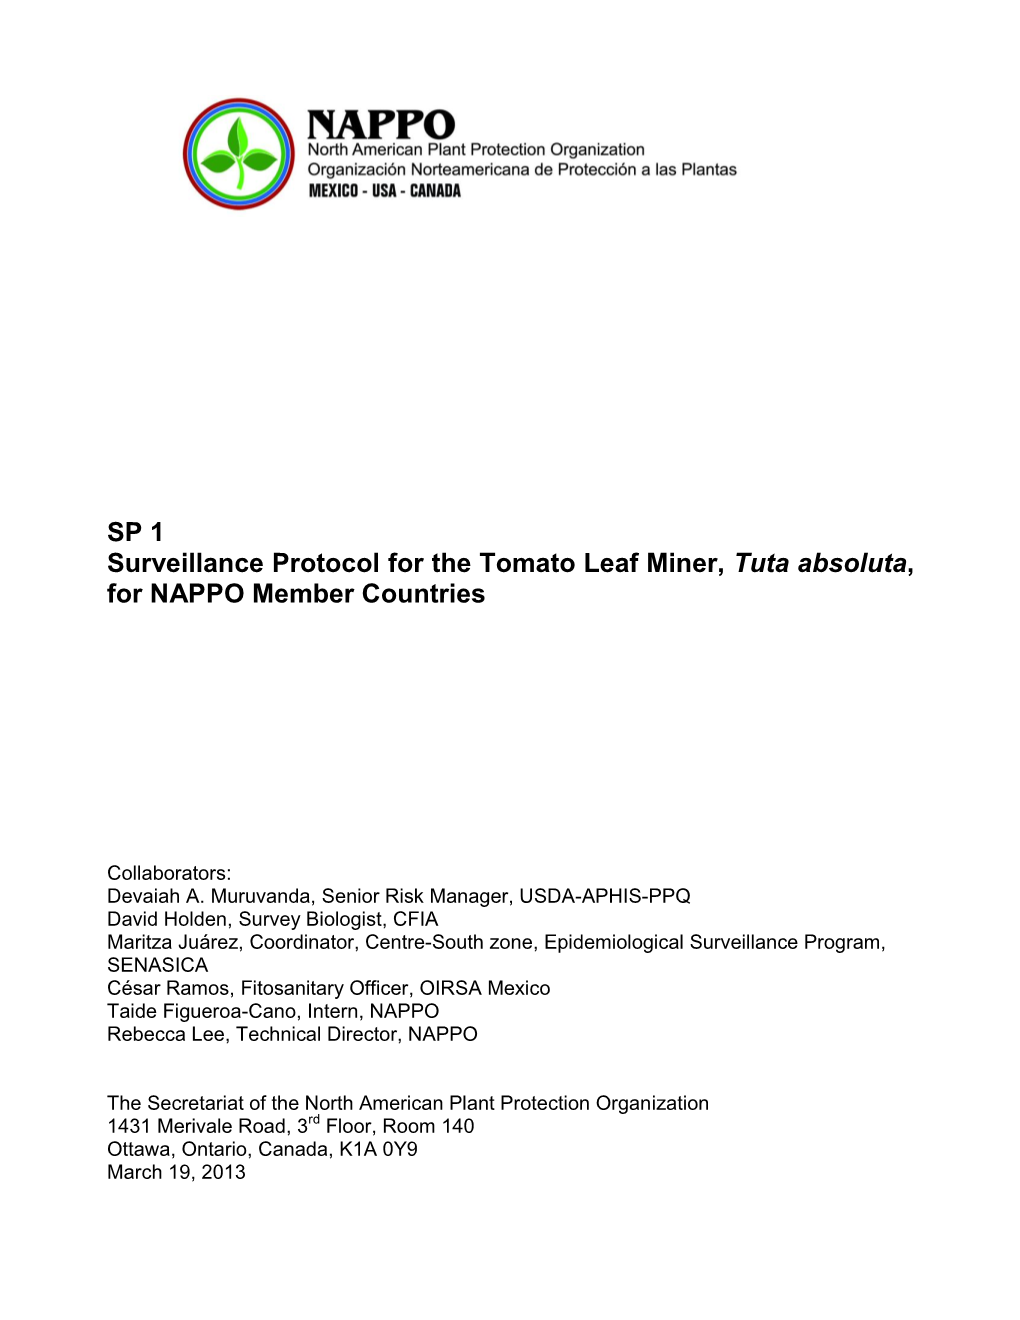 SP 1 Surveillance Protocol for the Tomato Leaf Miner, Tuta Absoluta, for NAPPO Member Countries